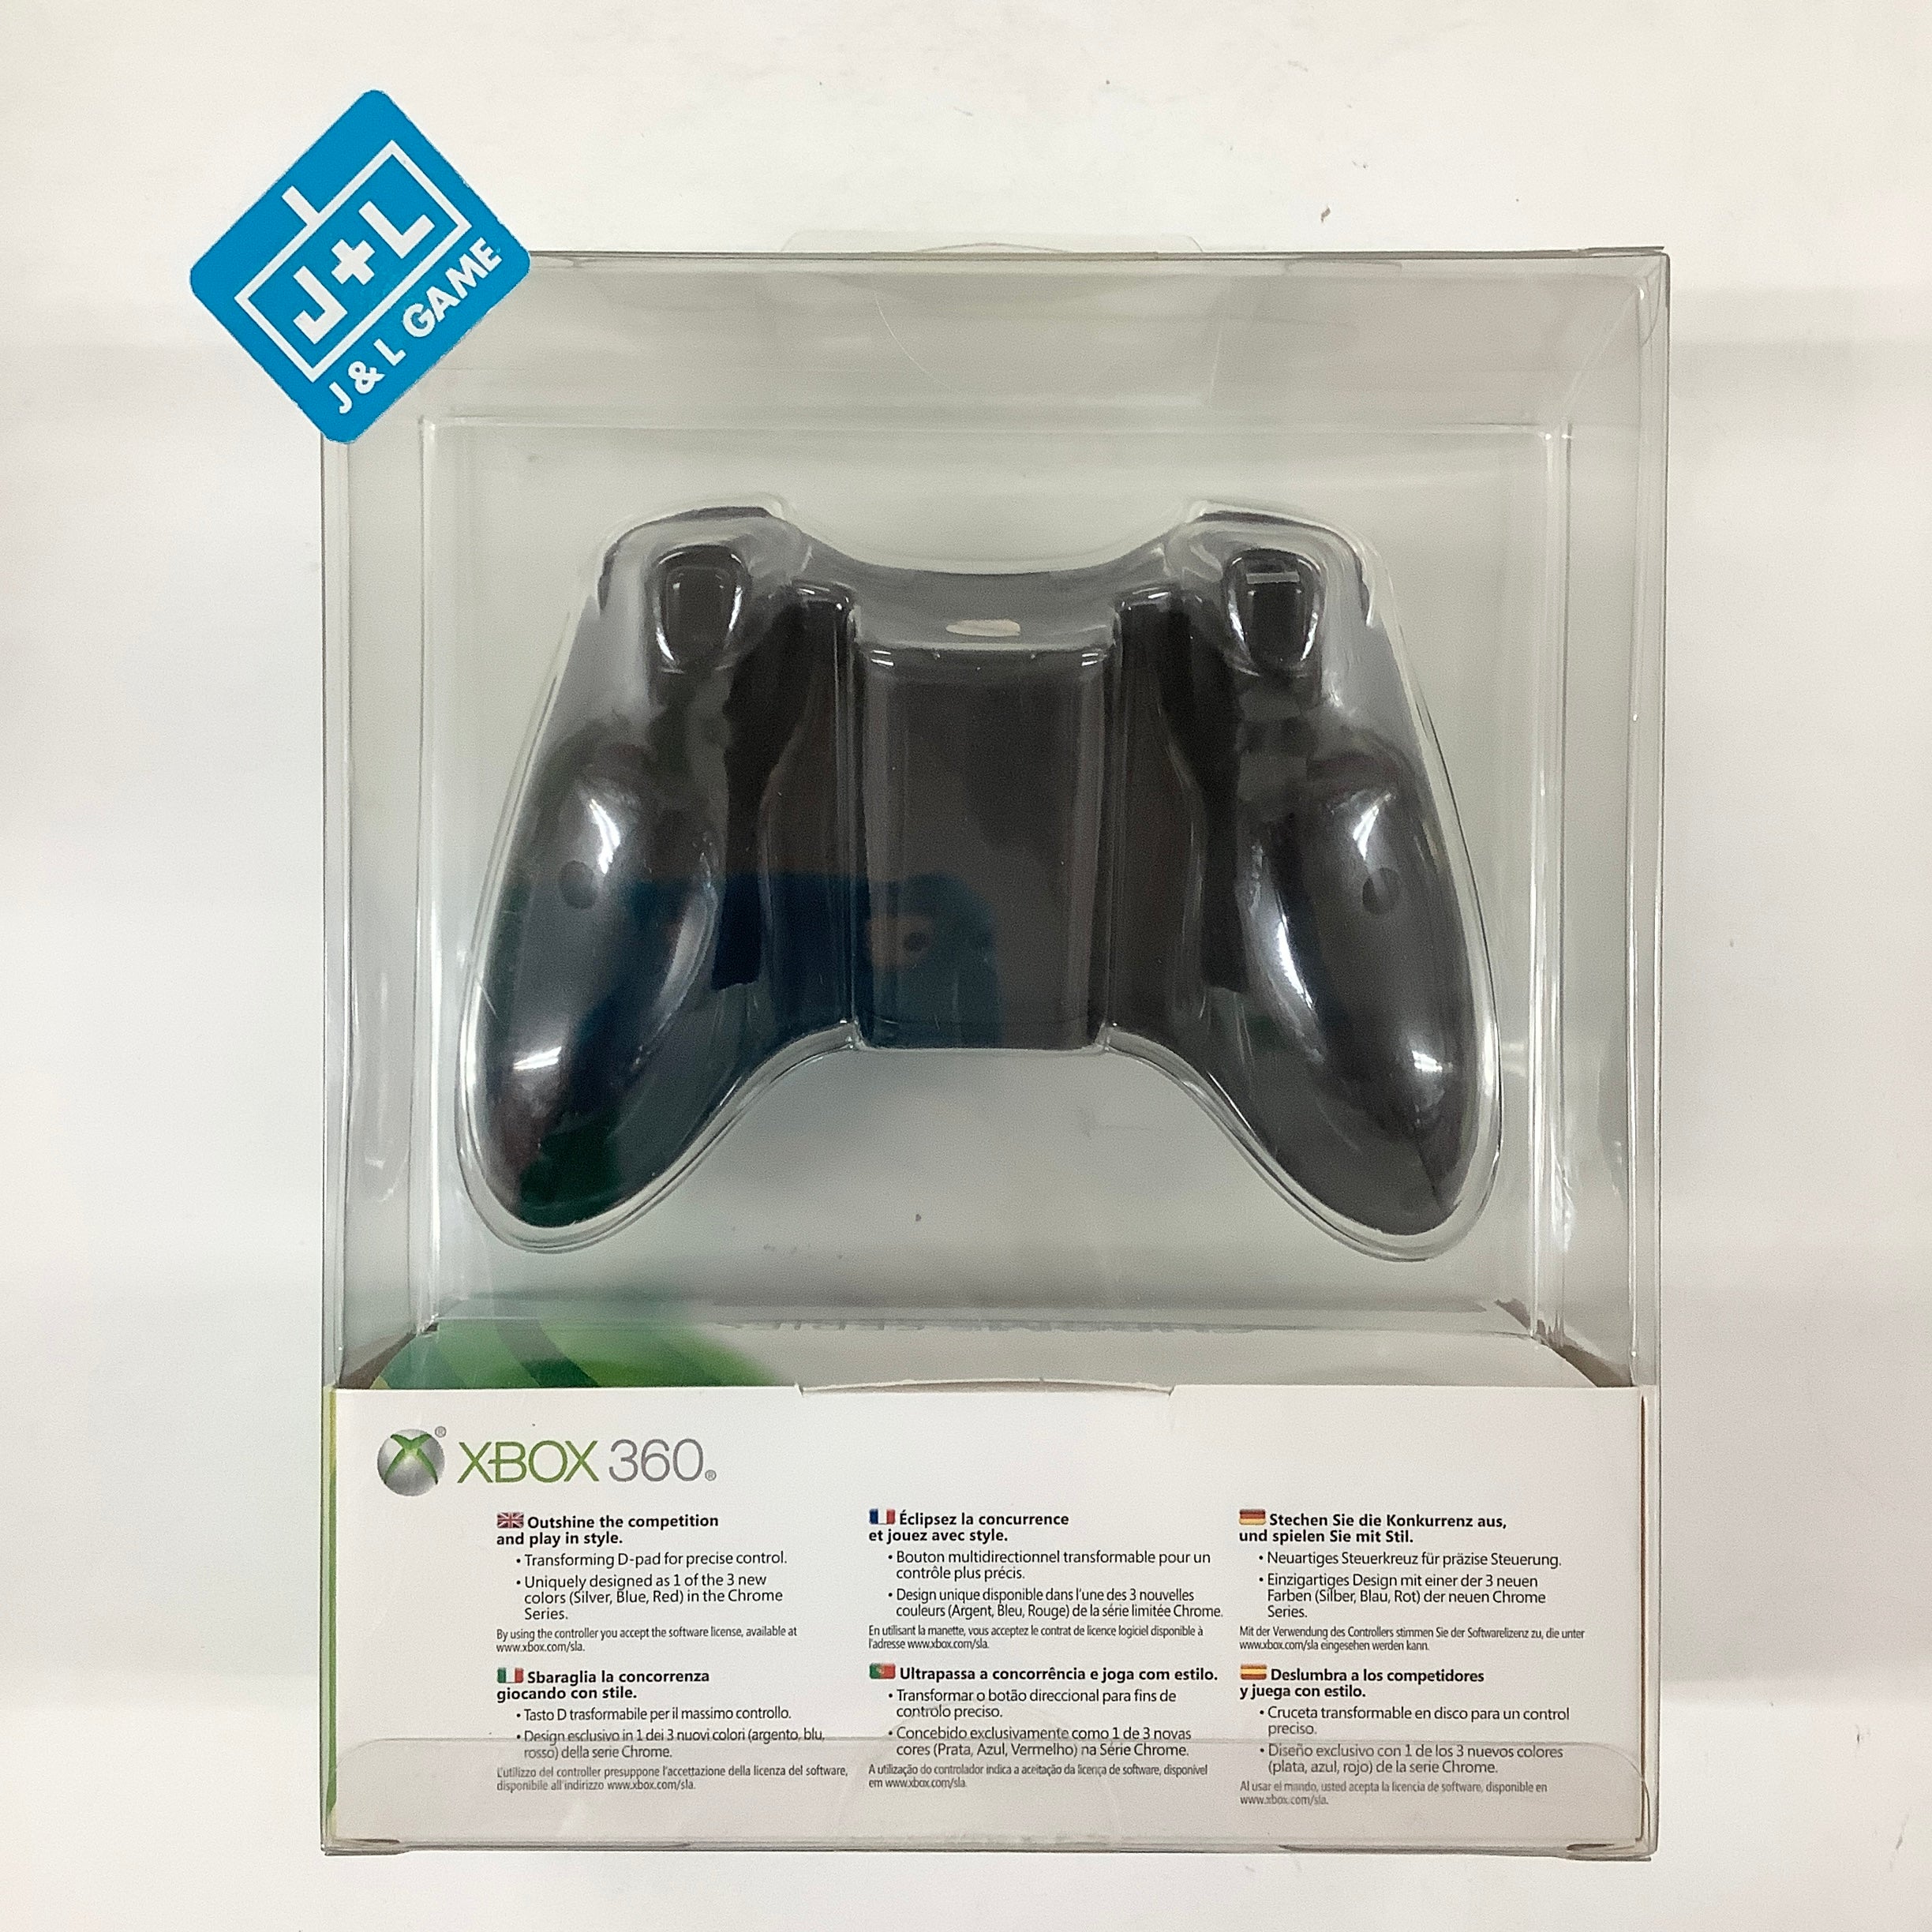 Microsoft Xbox 360 Wireless Controller - Chrome Silver - Xbox 360 (European Import) Accessories Microsoft   